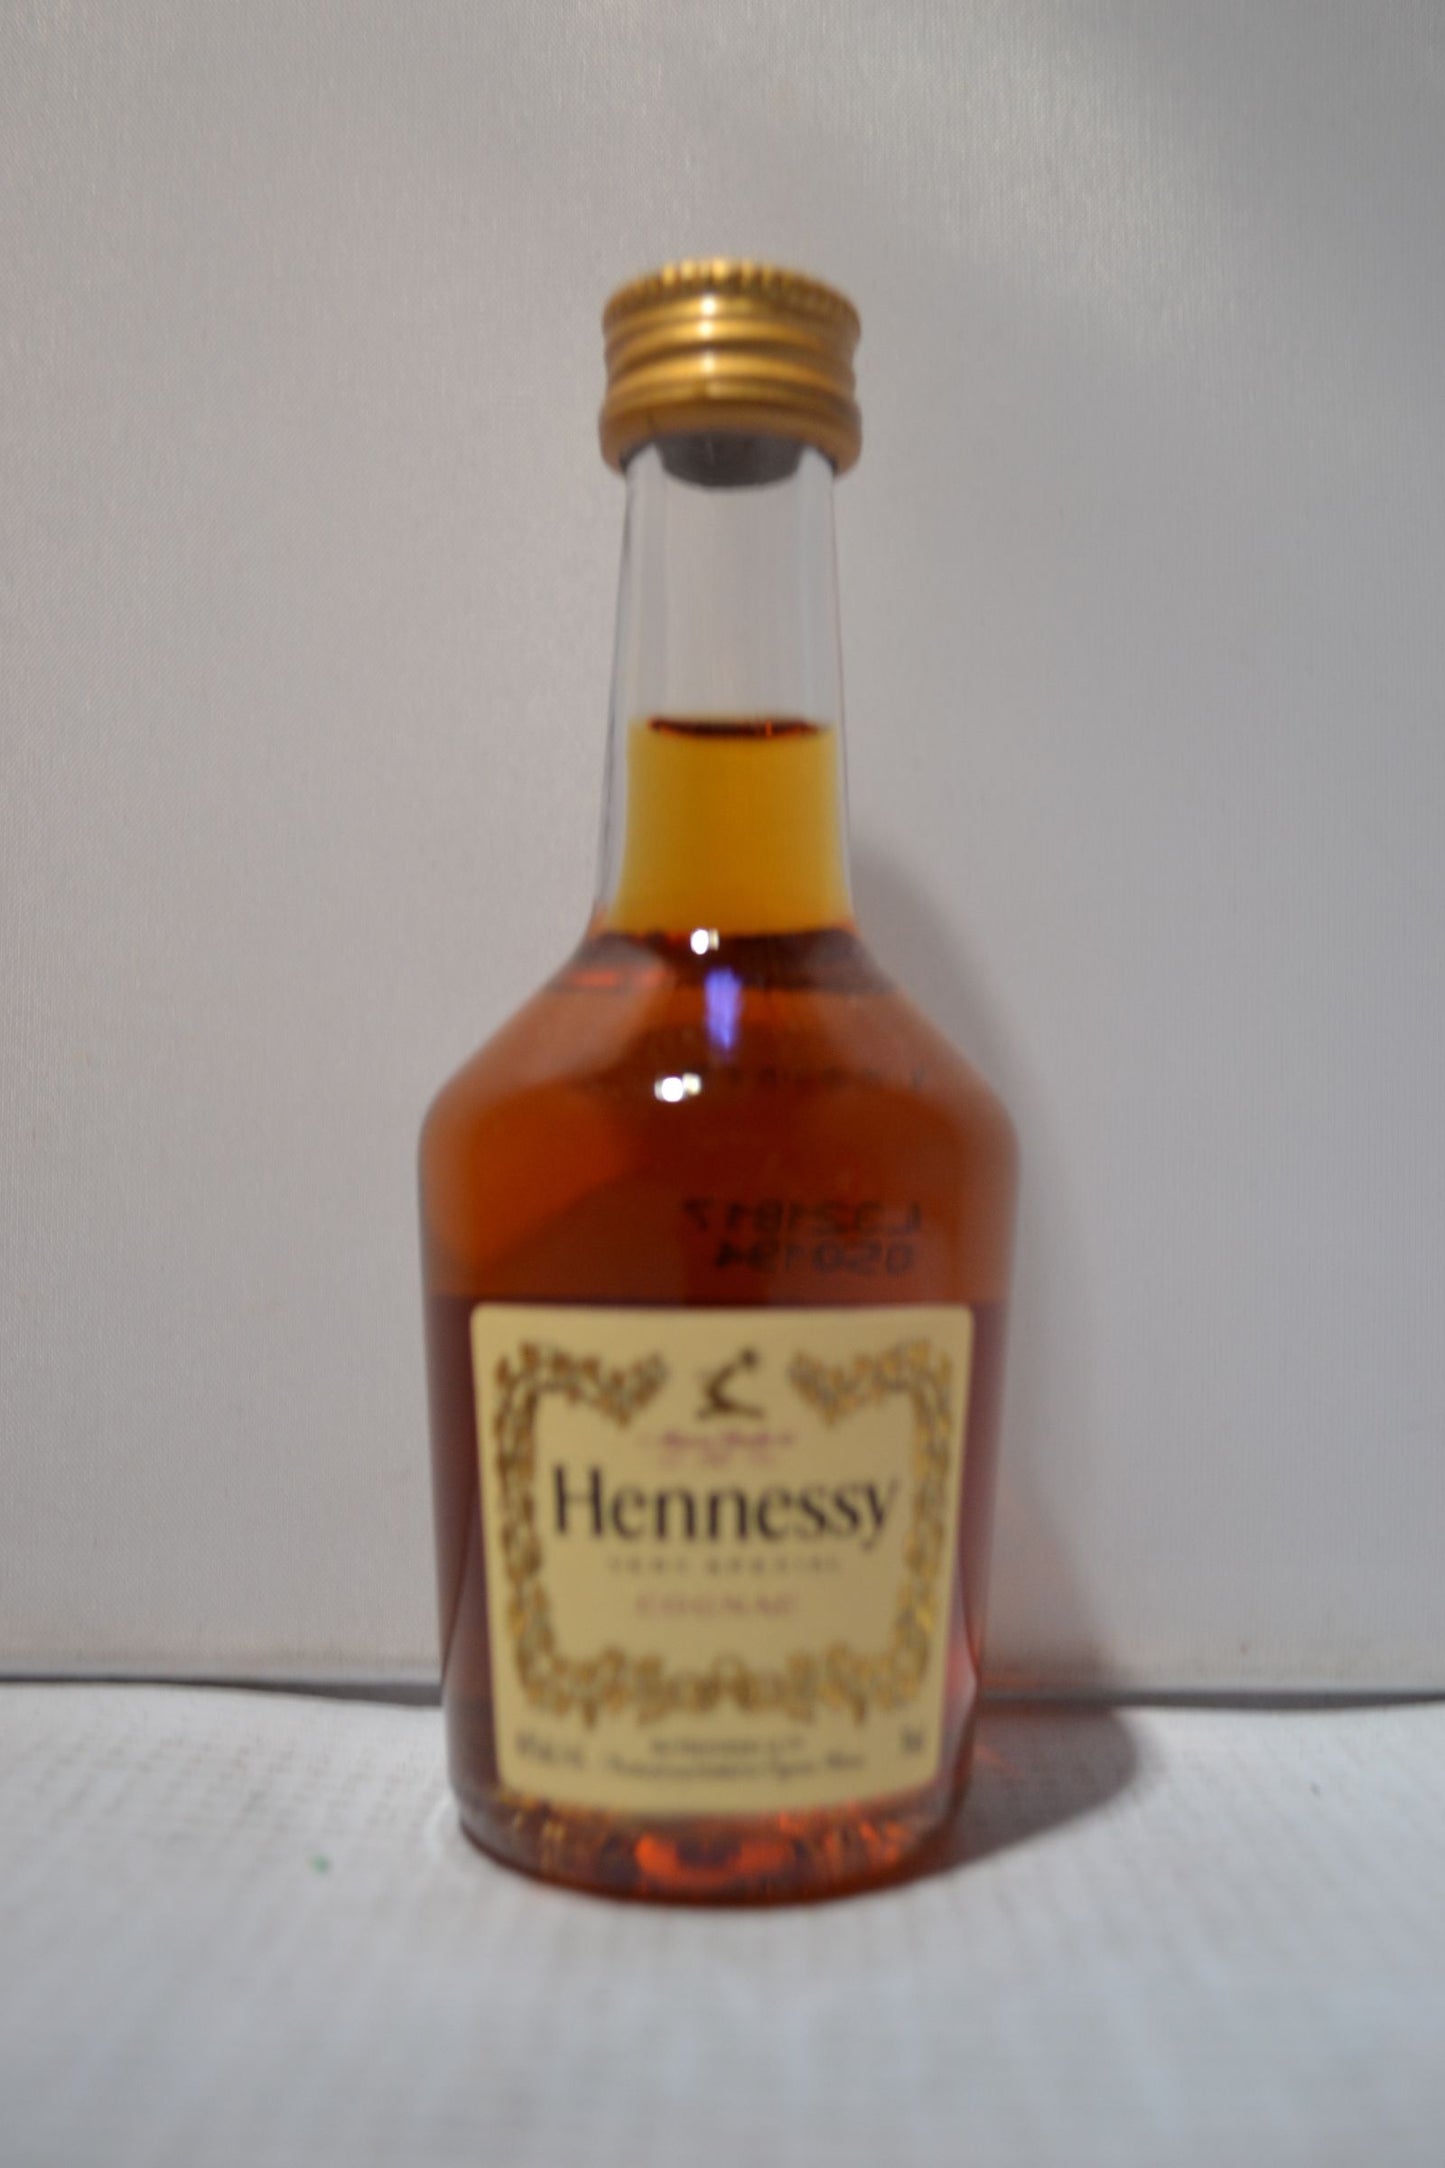 Remy Martin Louis XIII Cognac (50 ML) - Glendale Liquor Store